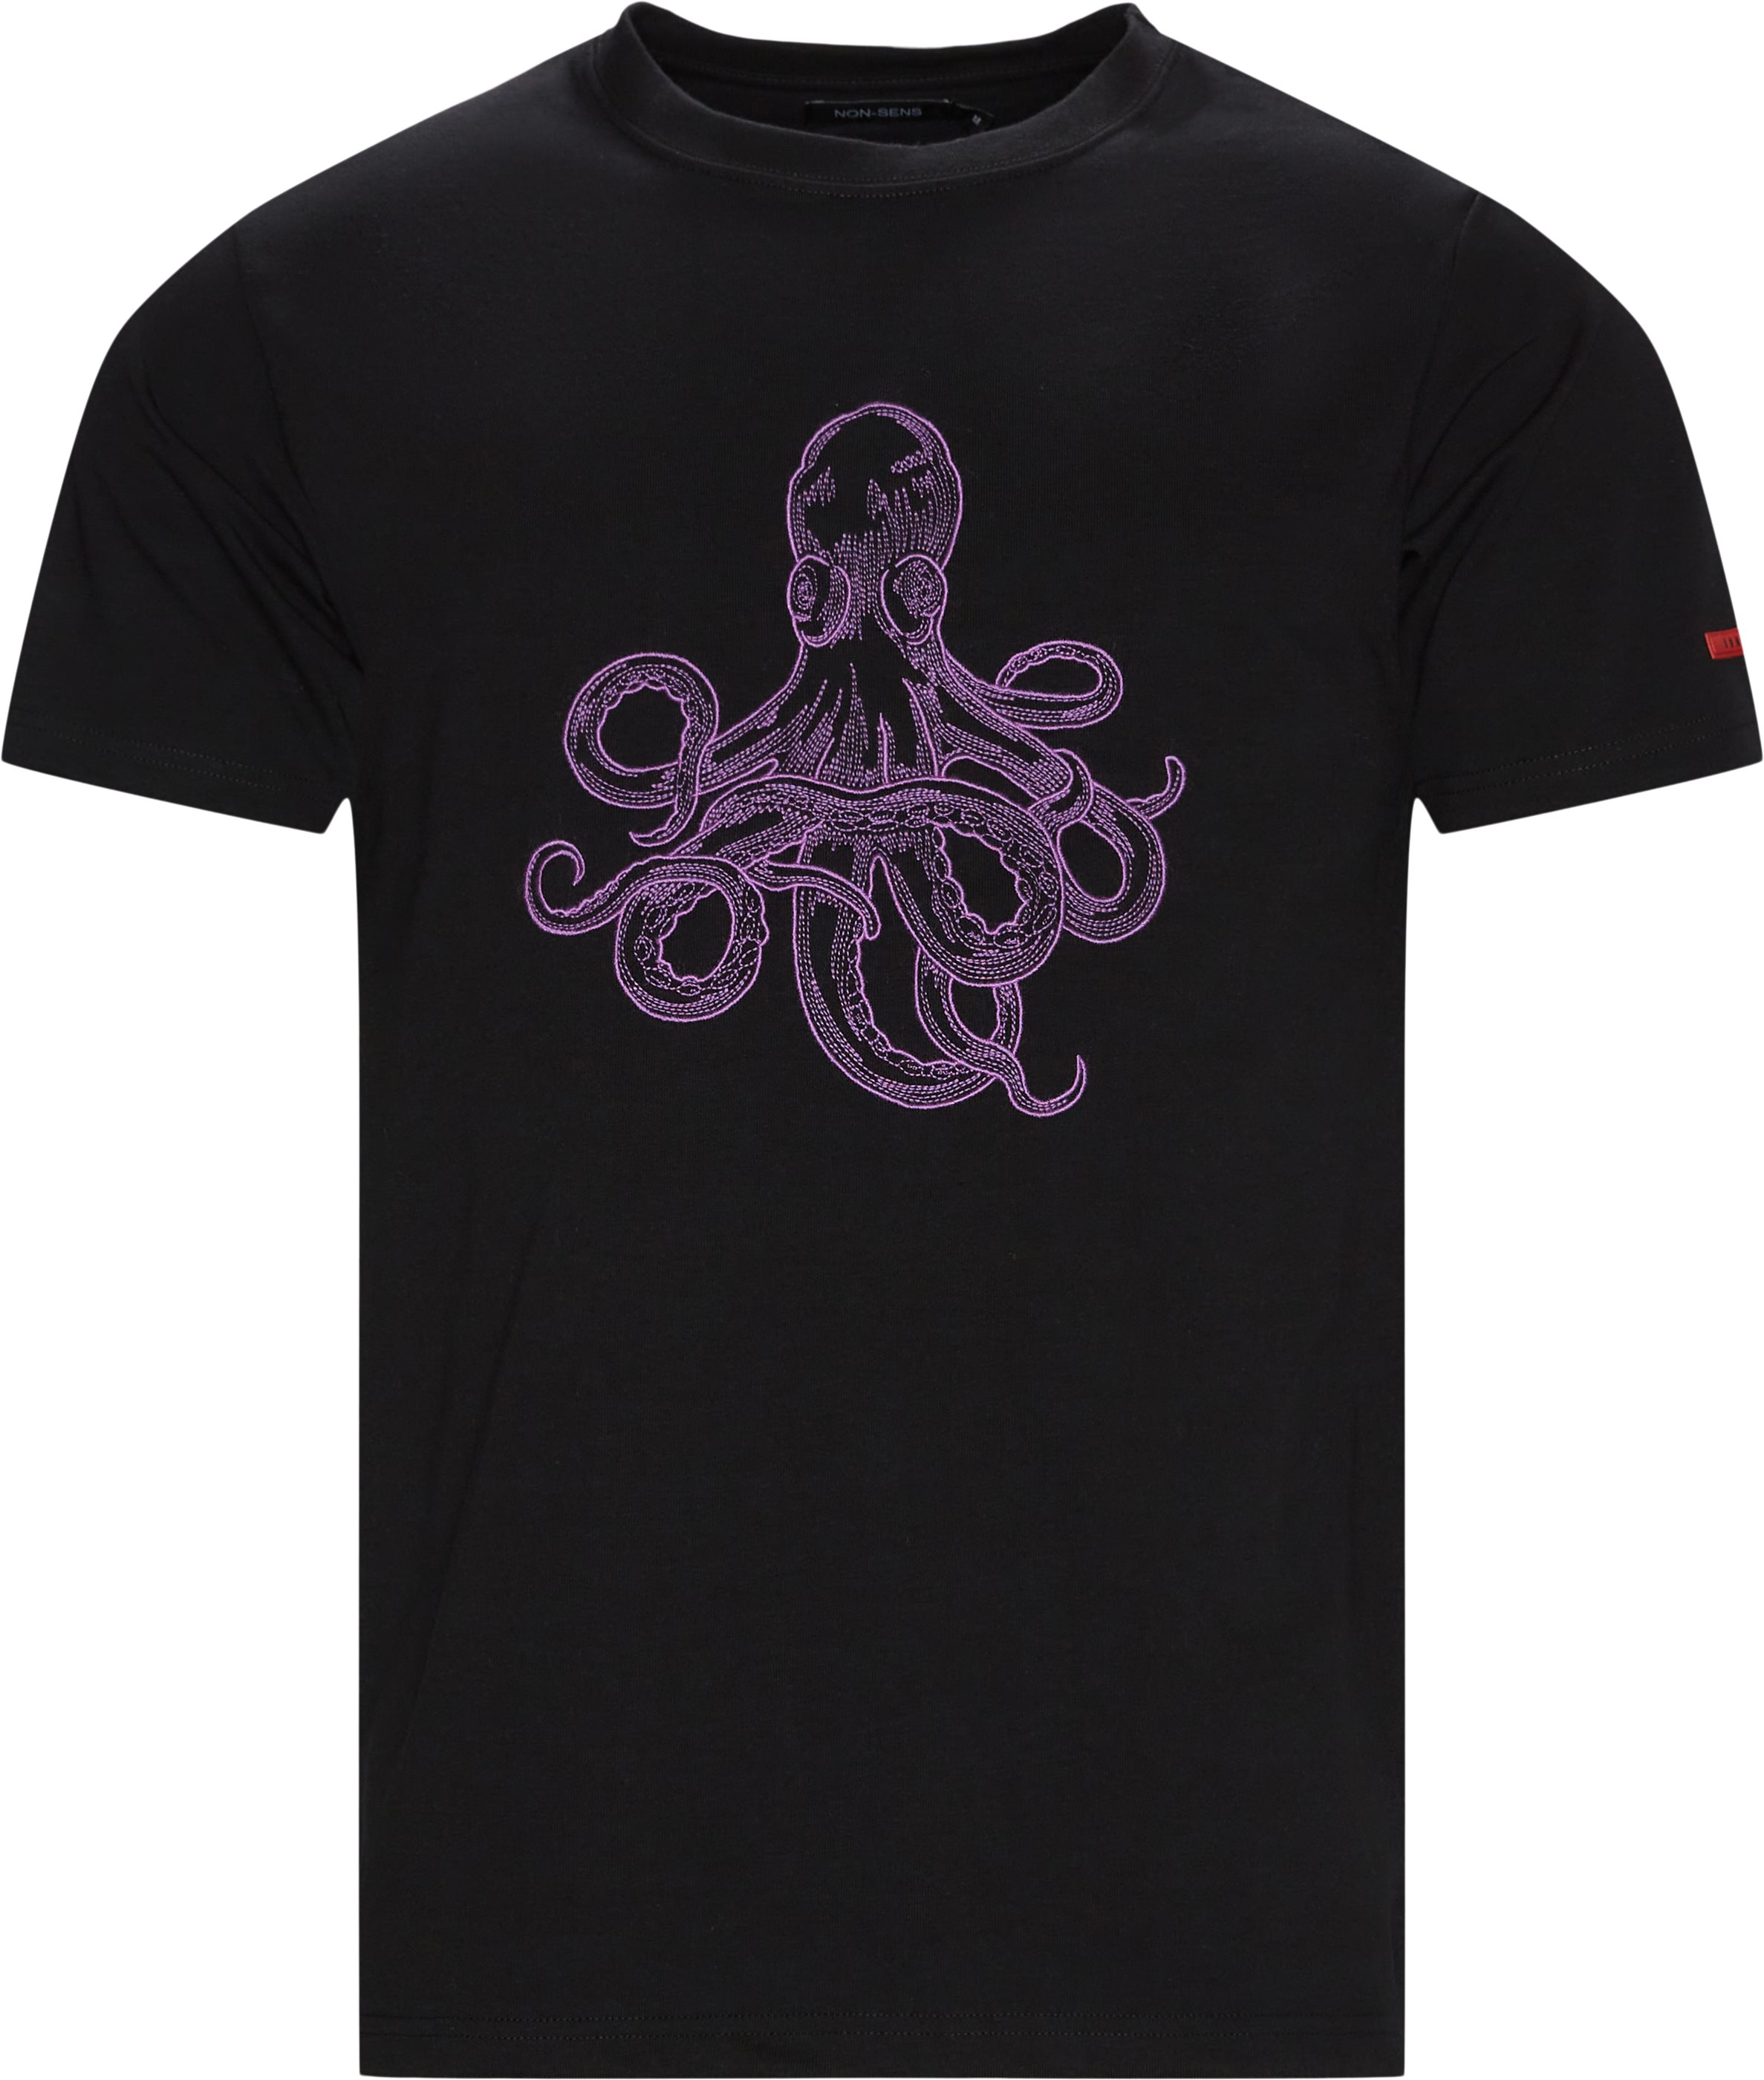 Octopus Tee - T-shirts - Regular fit - Sort